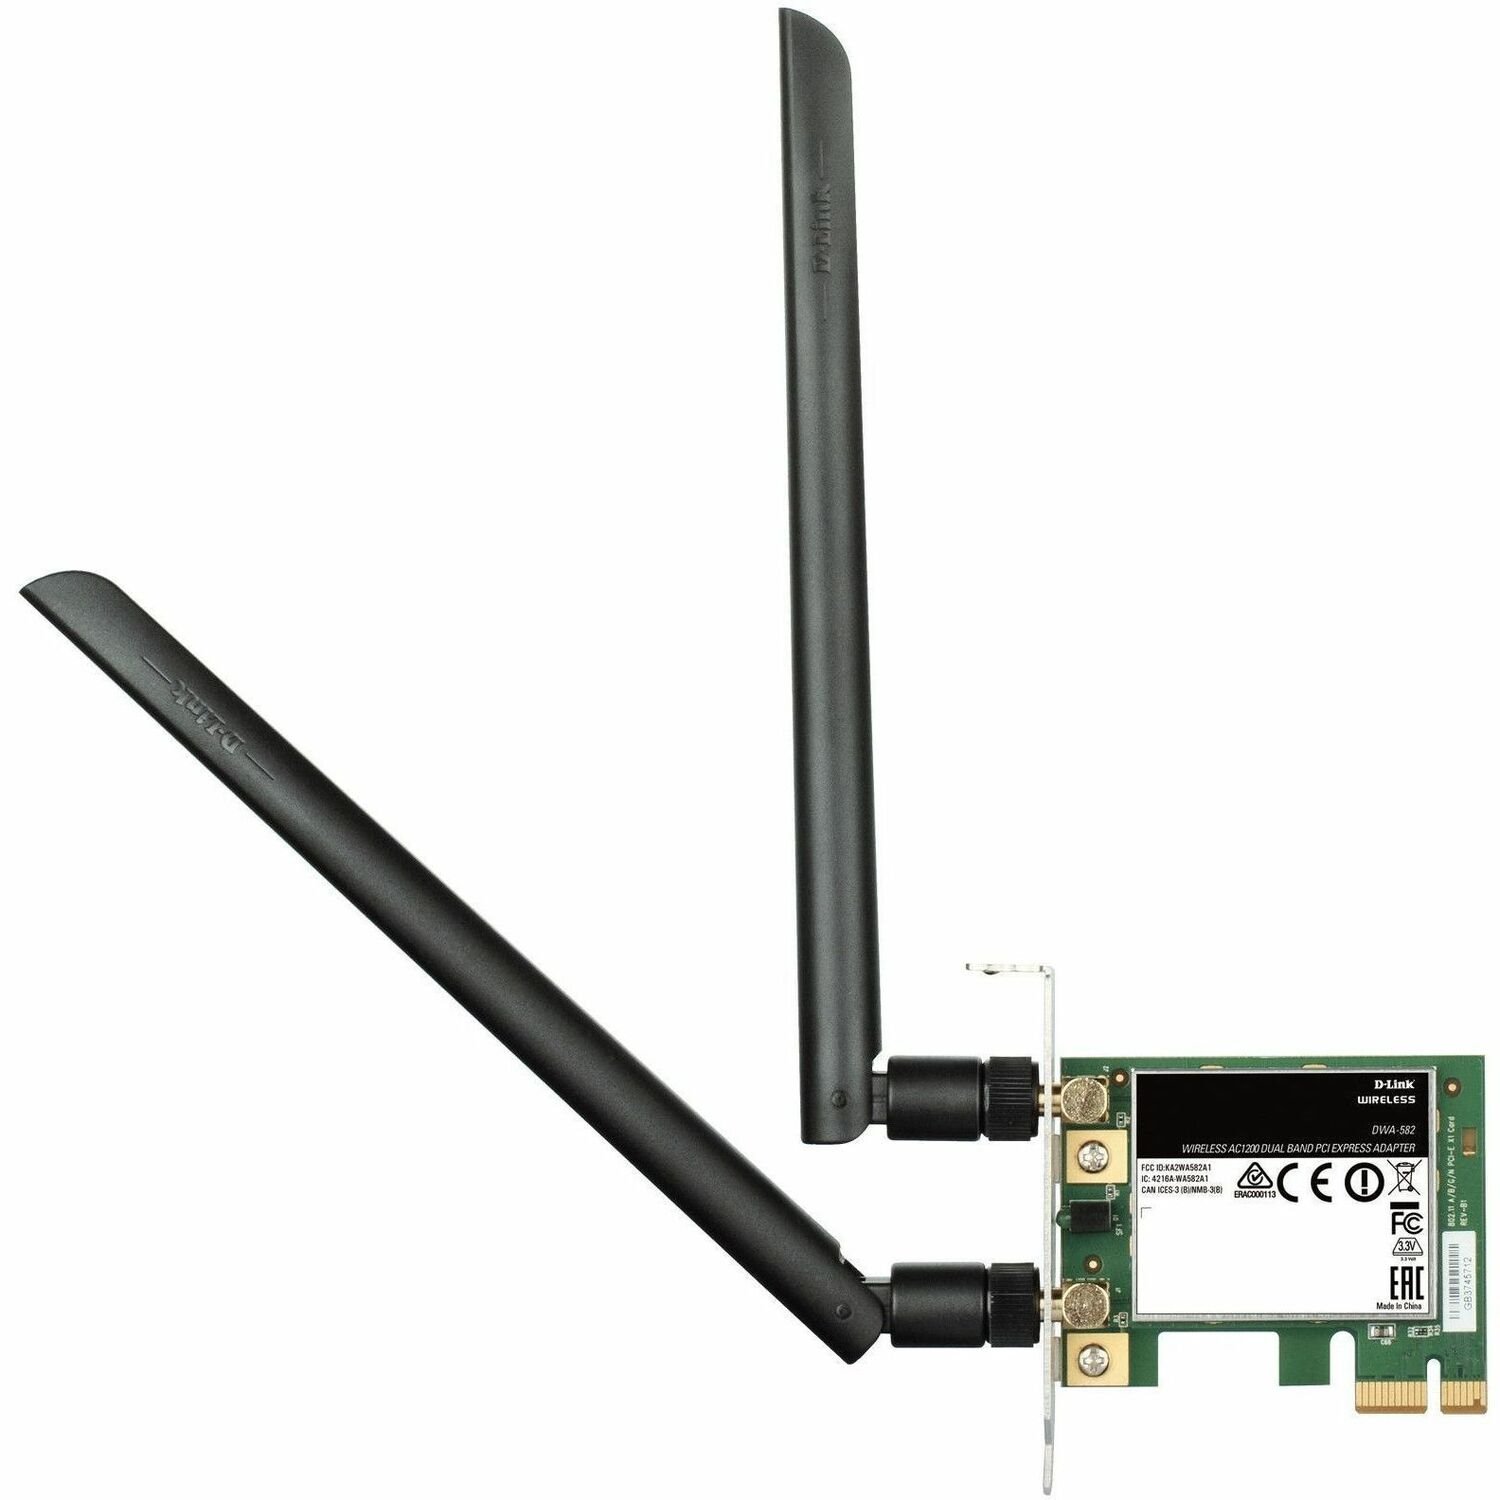 D-Link DWA-582 IEEE 802.11b/g/n/ac Wi-Fi Adapter for Desktop Computer